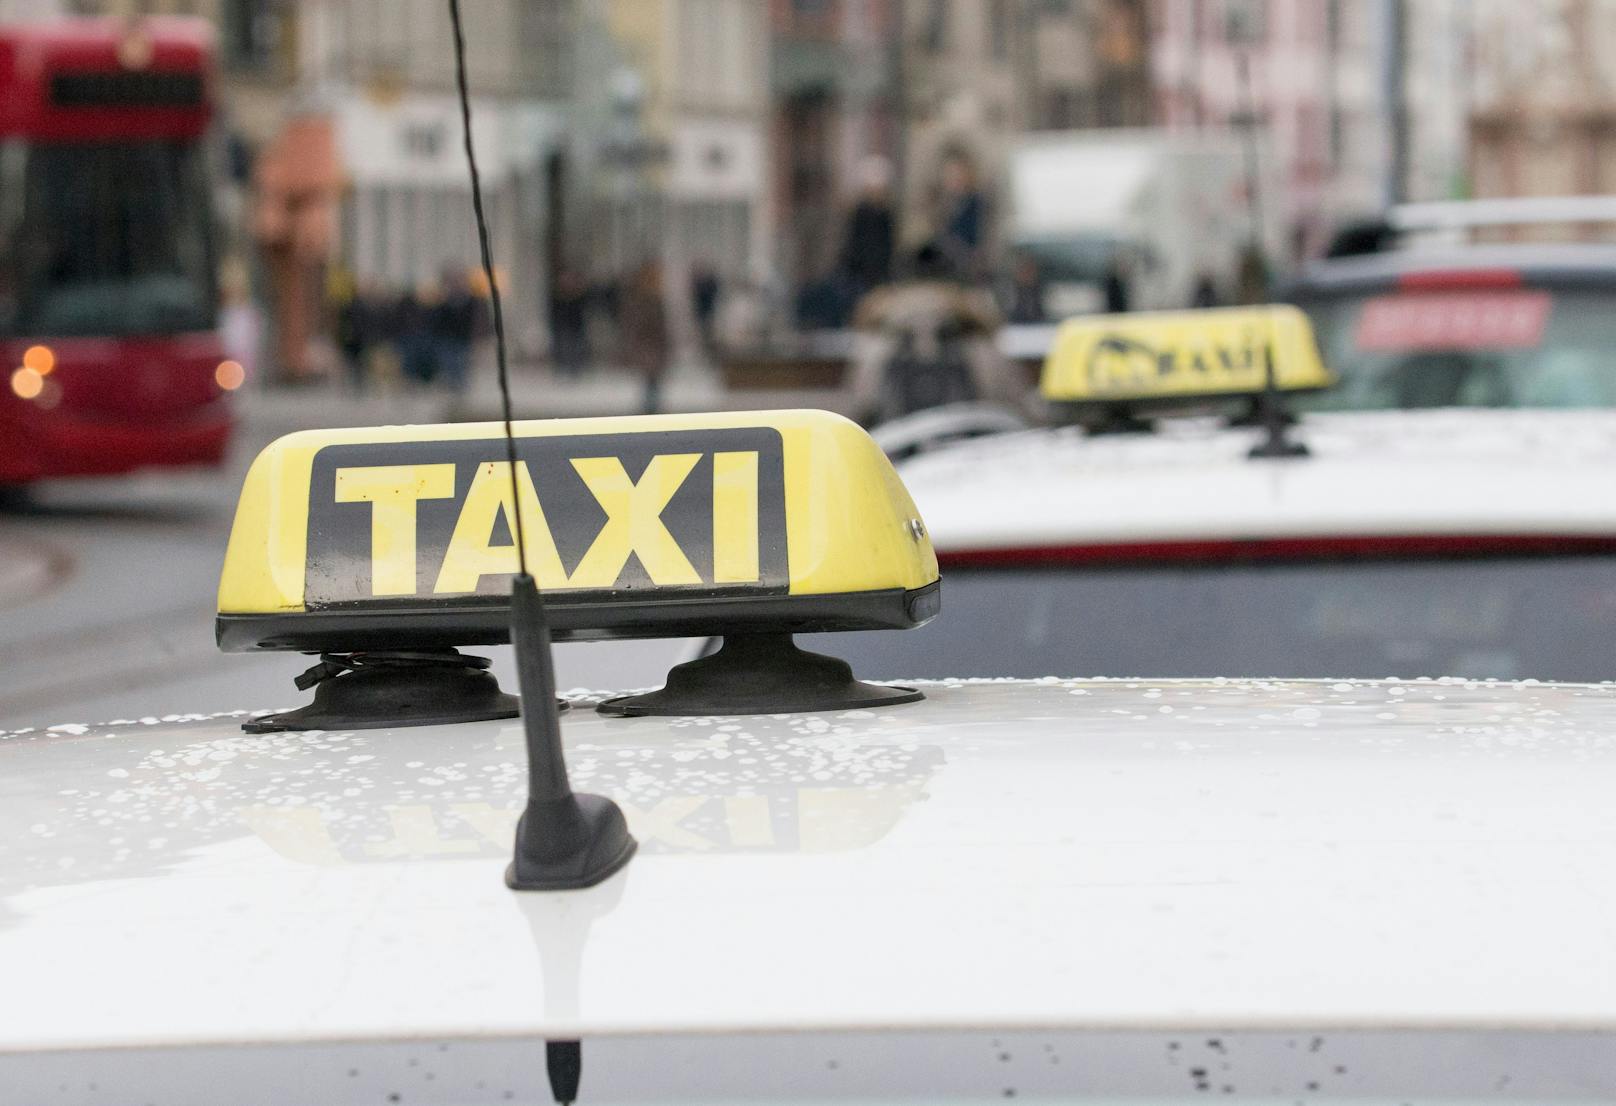 Urlauber prügeln Tiroler bei Streit um Taxi bewusstlos